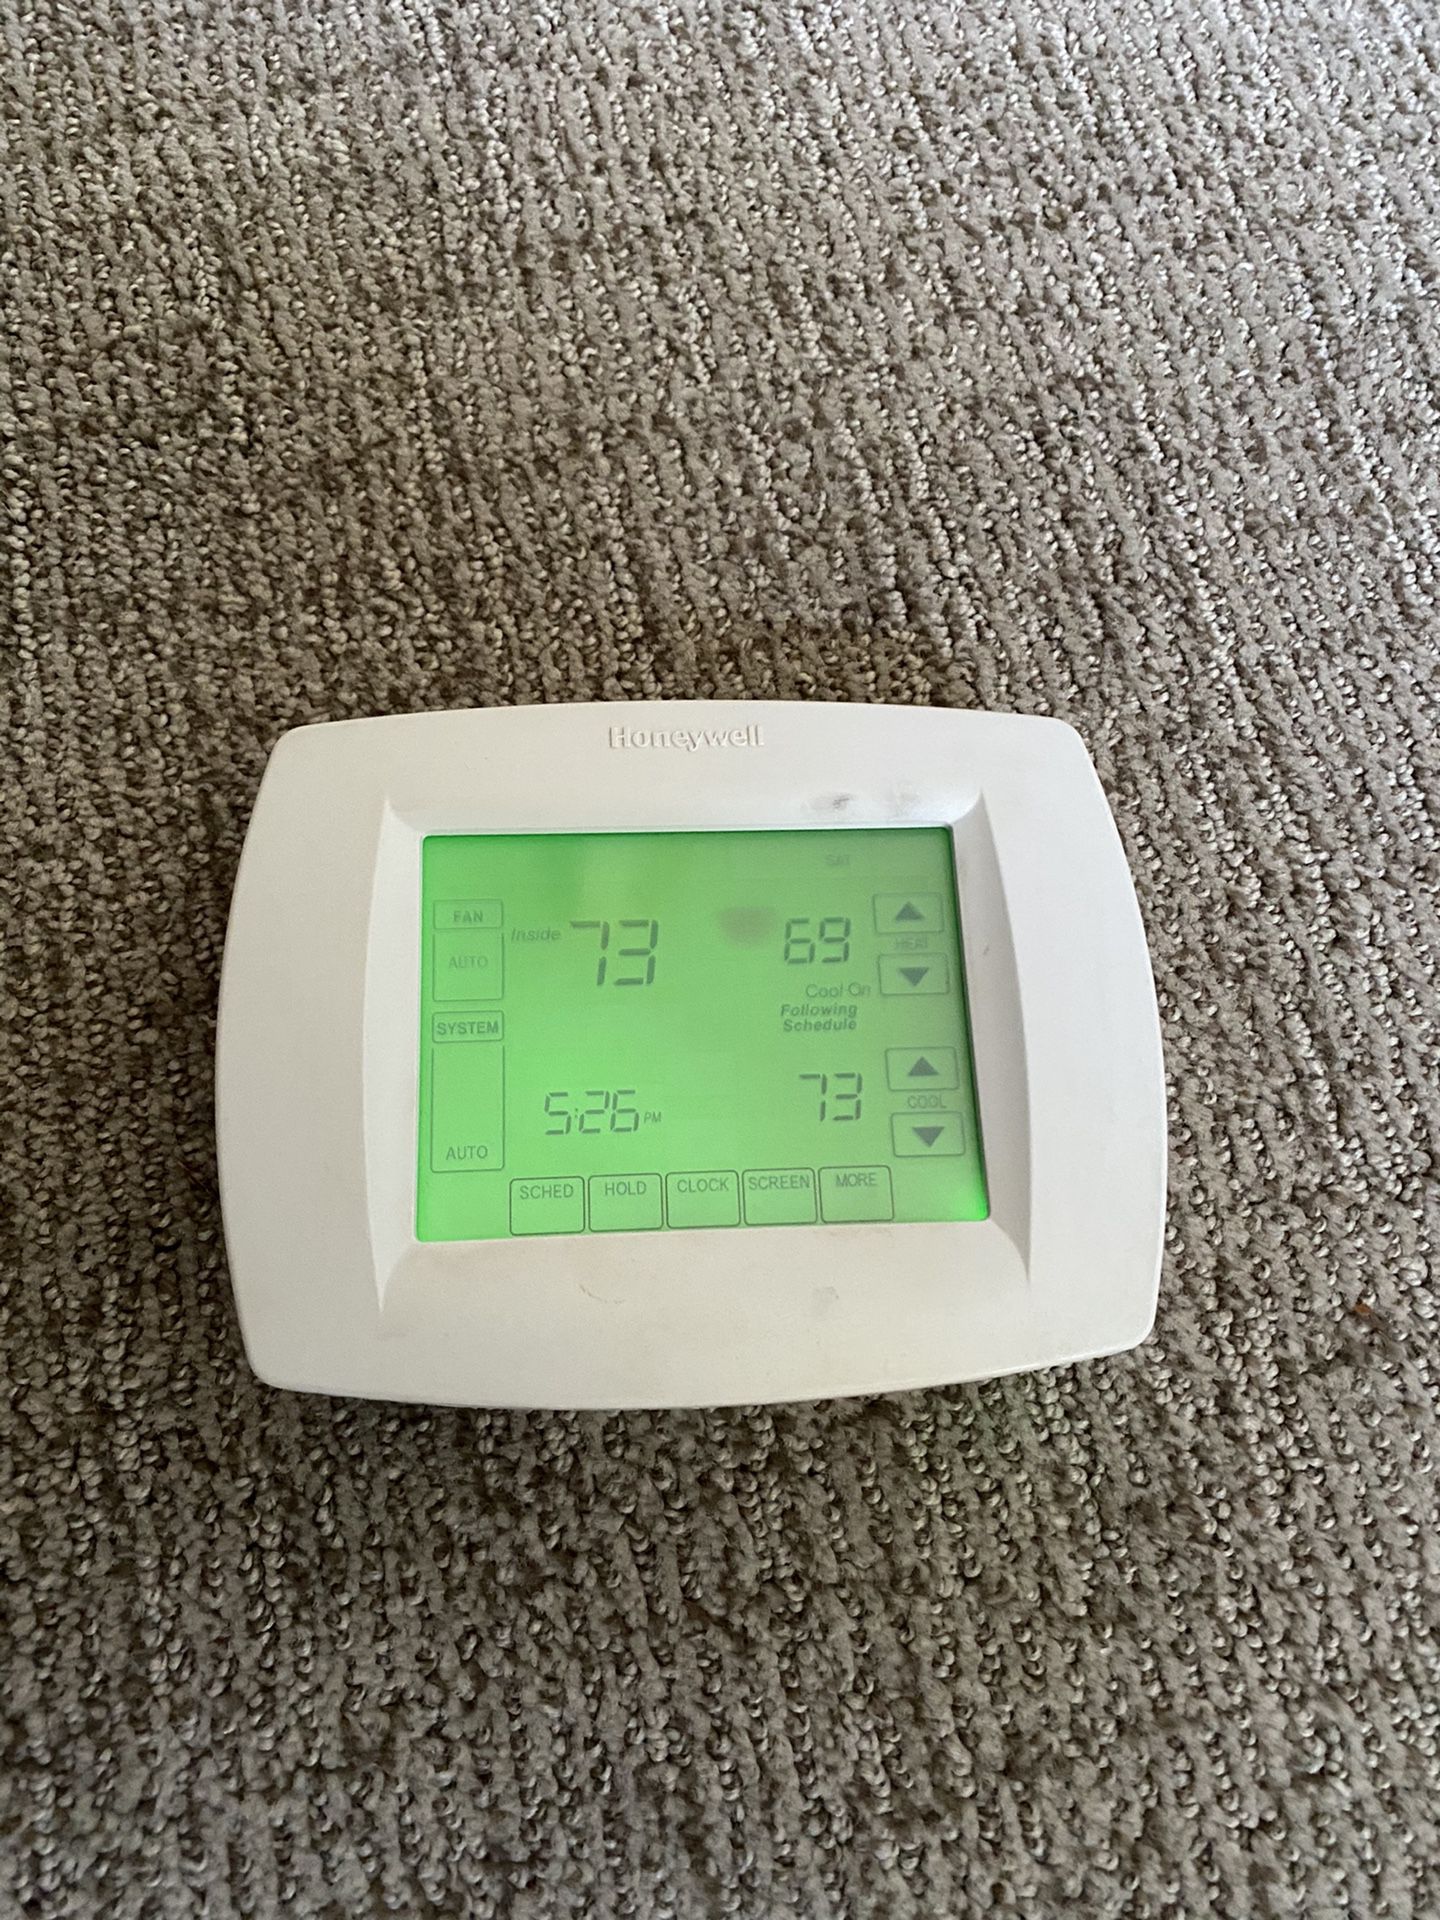 Honeywell 7-day thermostat